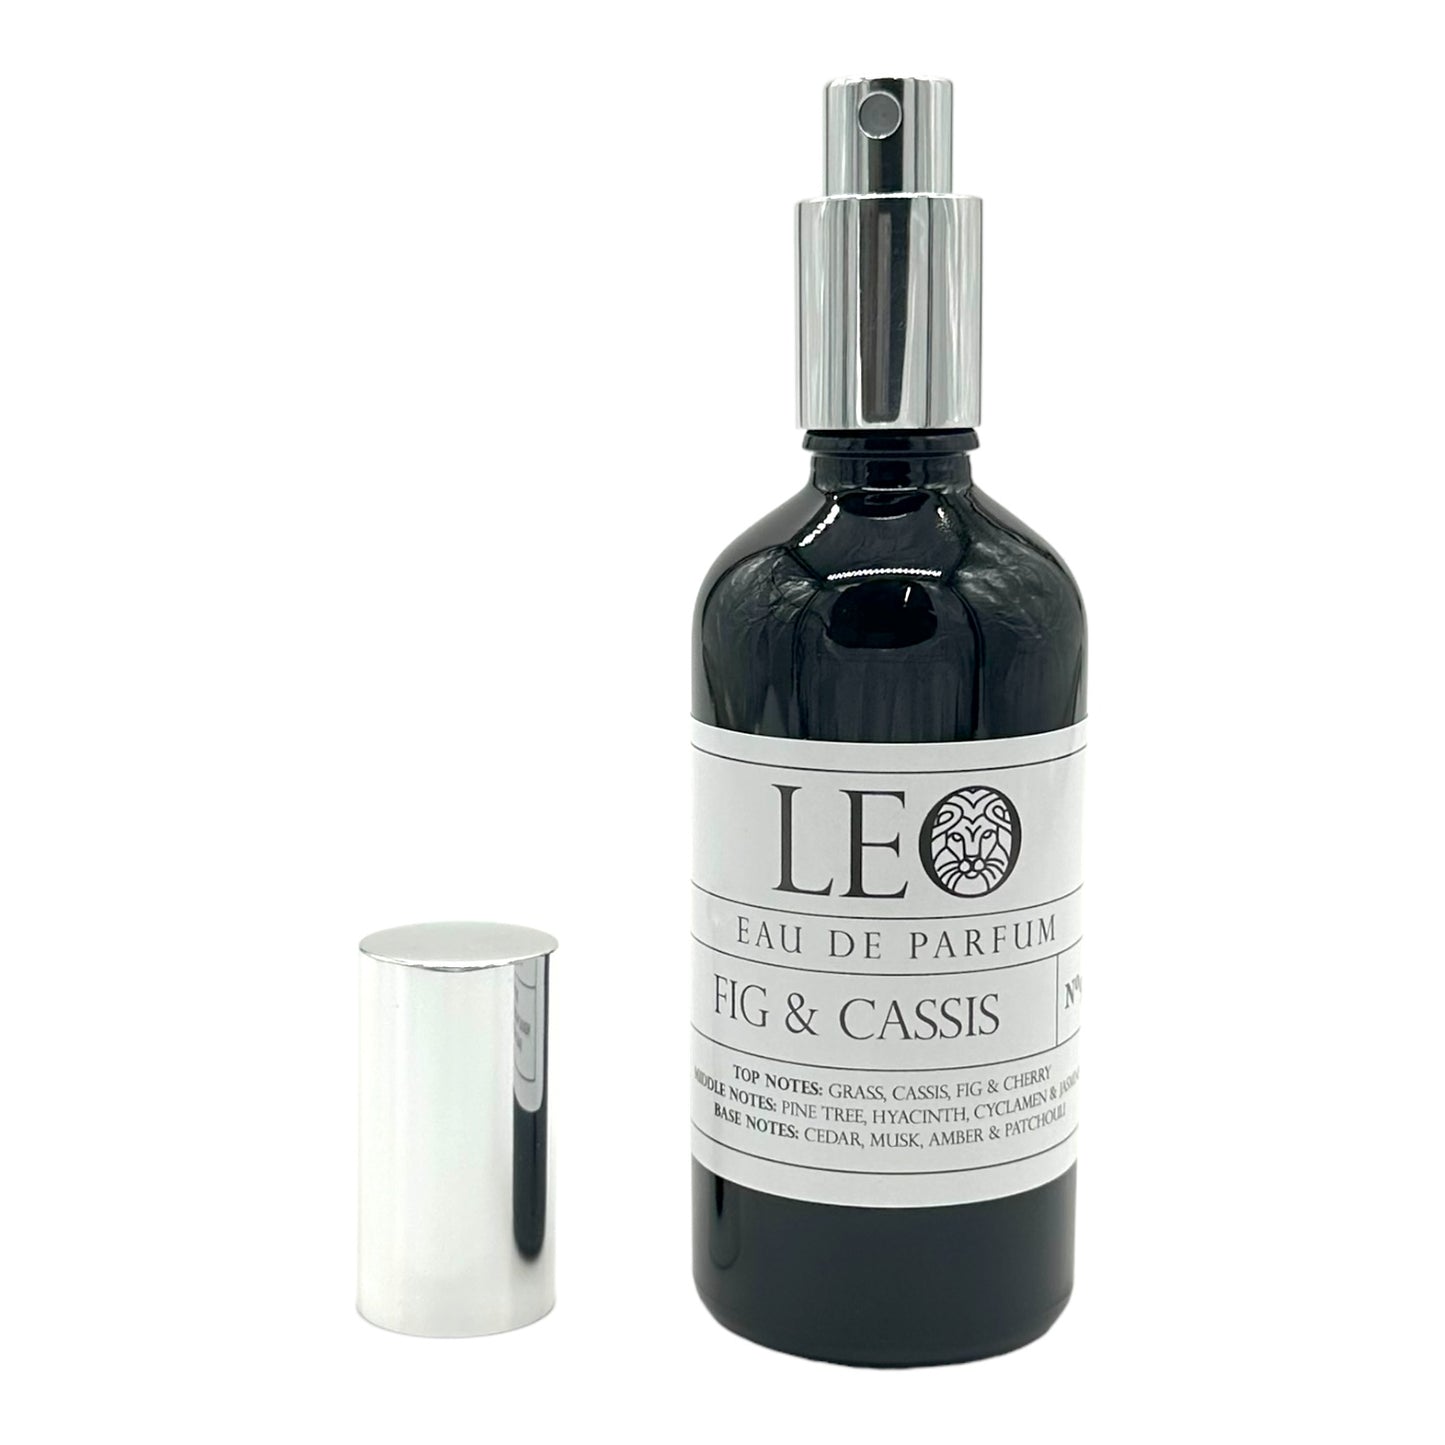 fig & cassis scented eau de parfum from leo